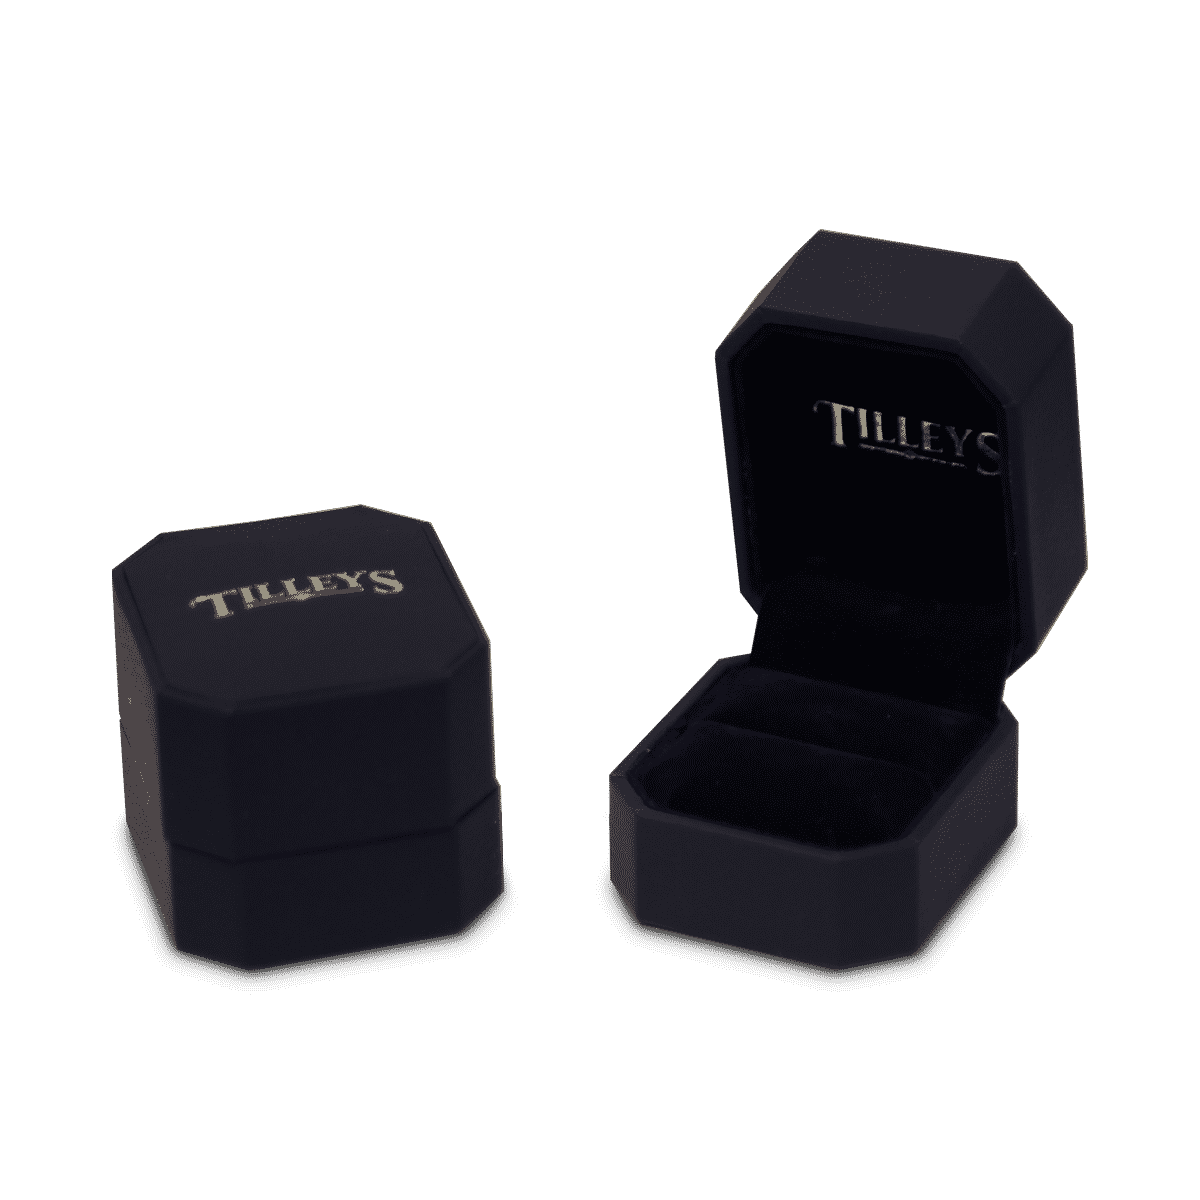 Jewellery box packaging - Tilleys